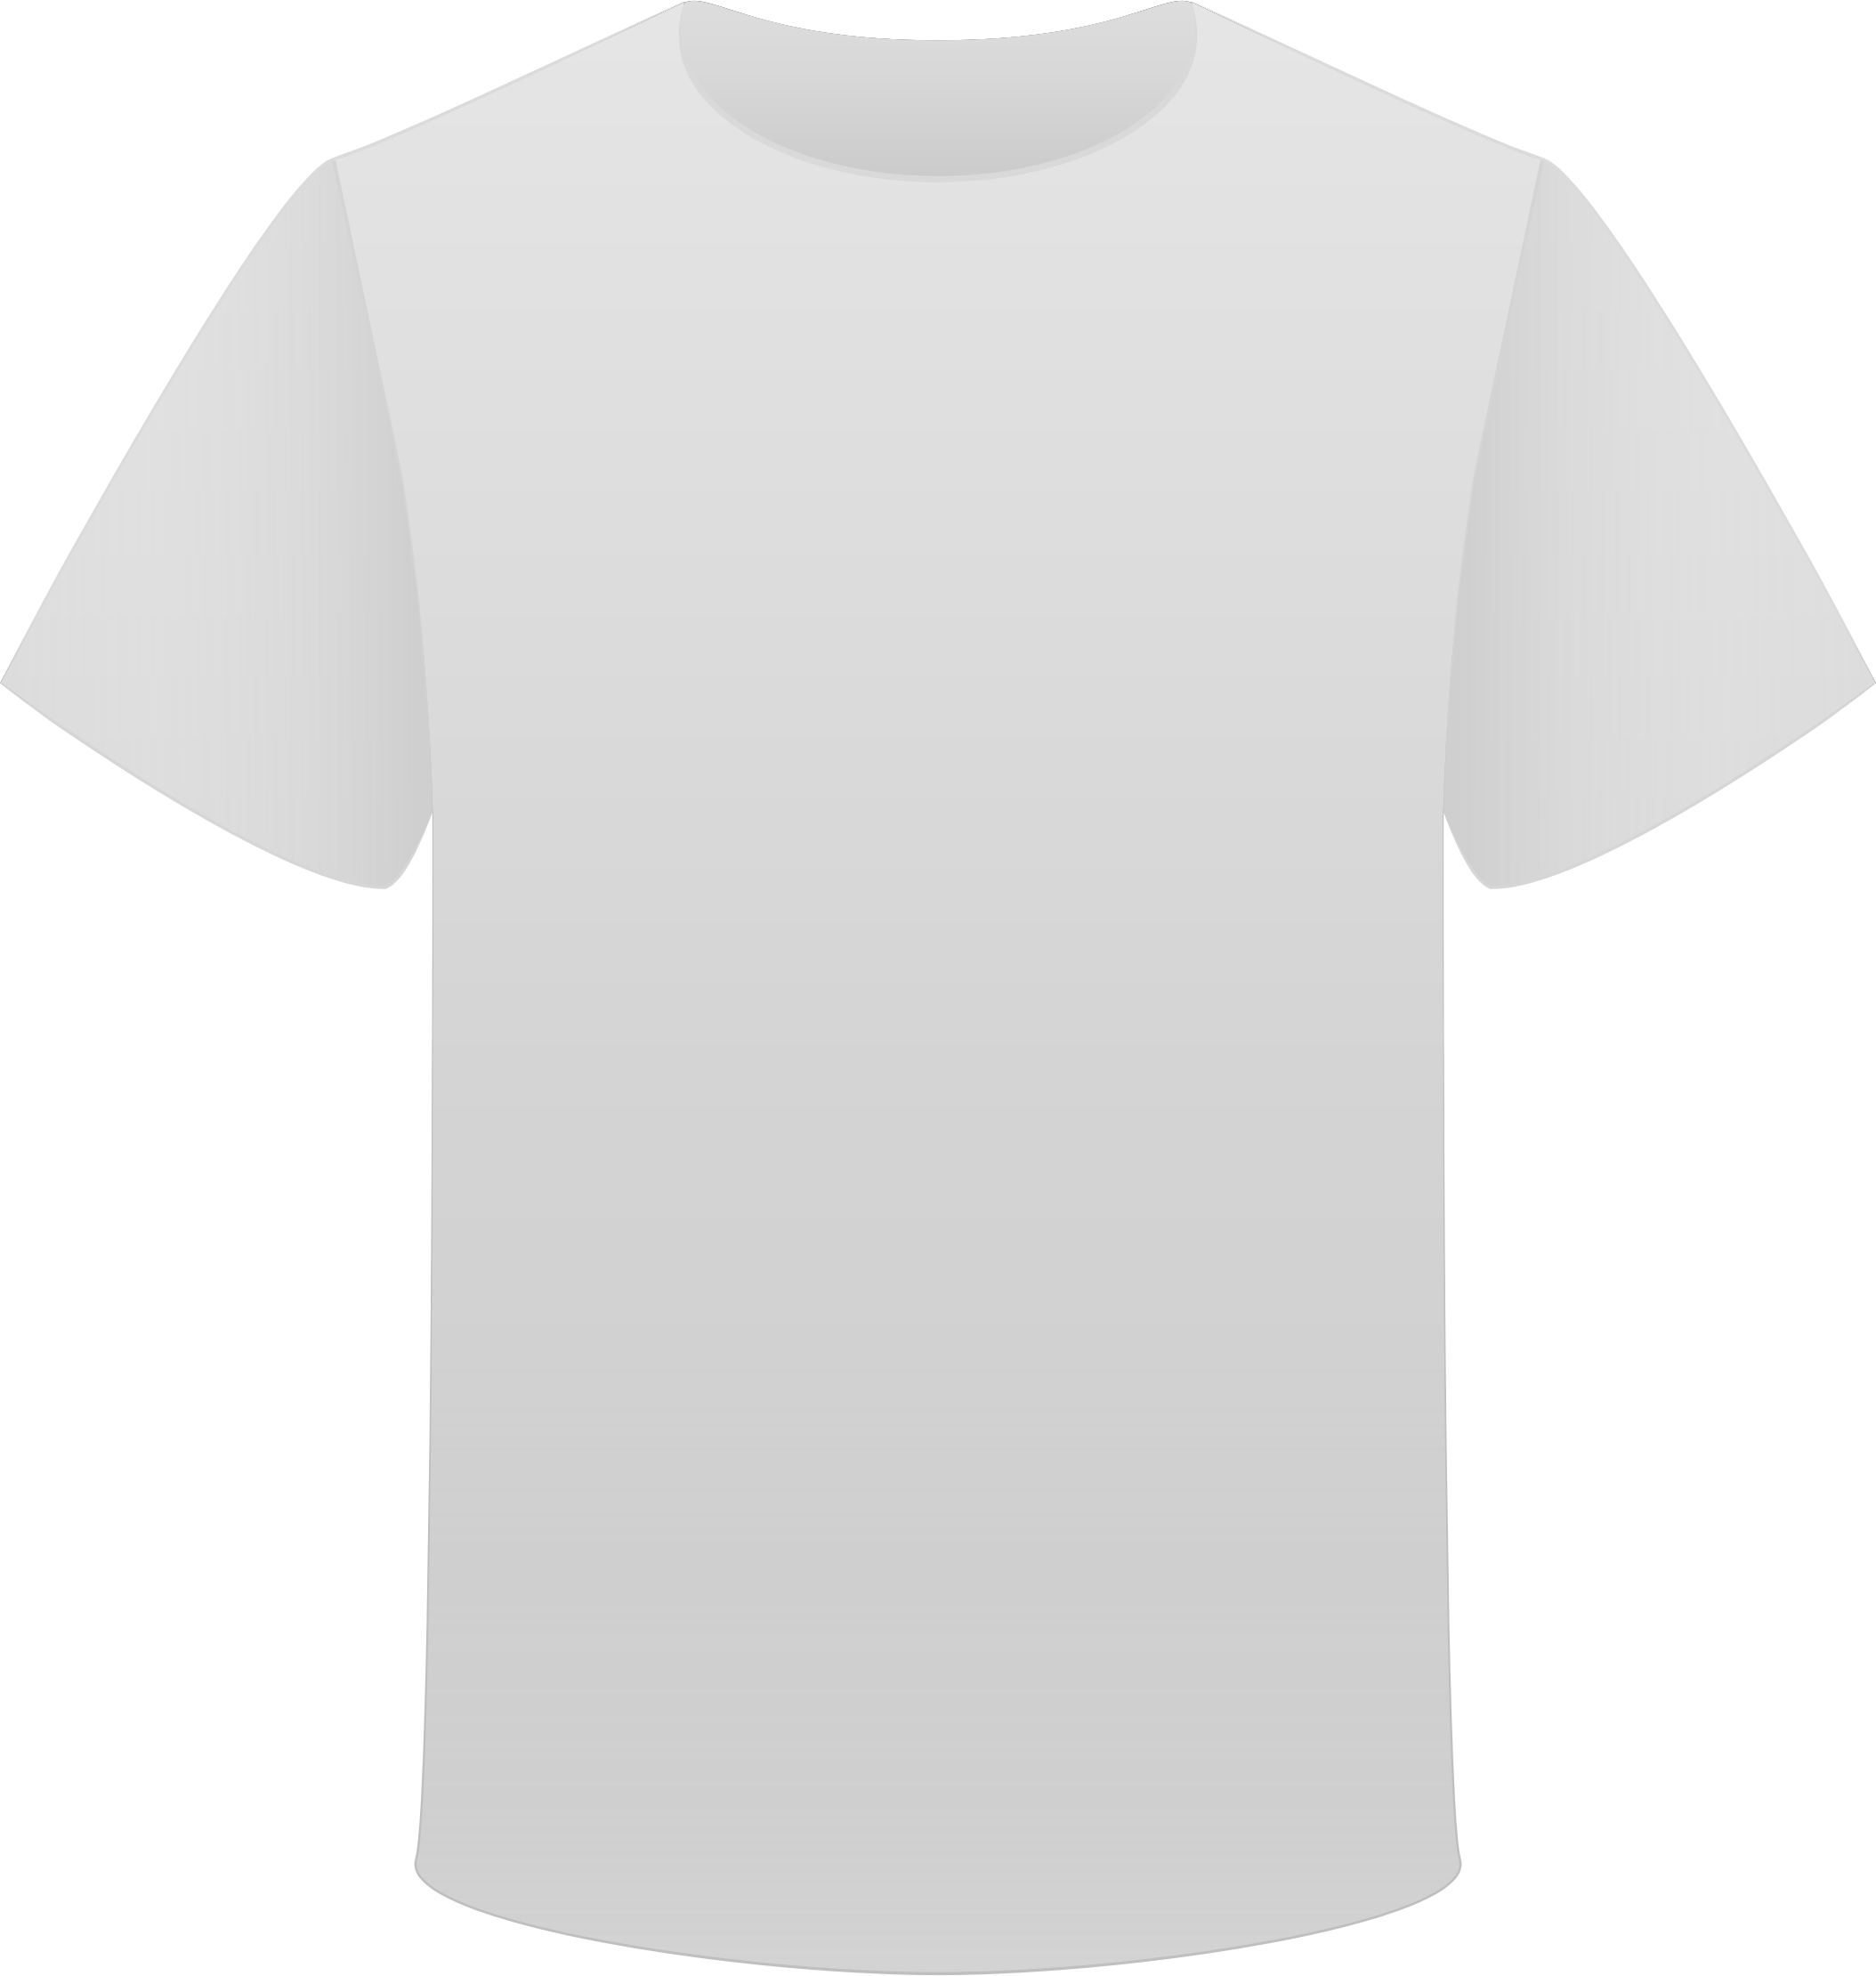 White T-Shirt PNG Pic